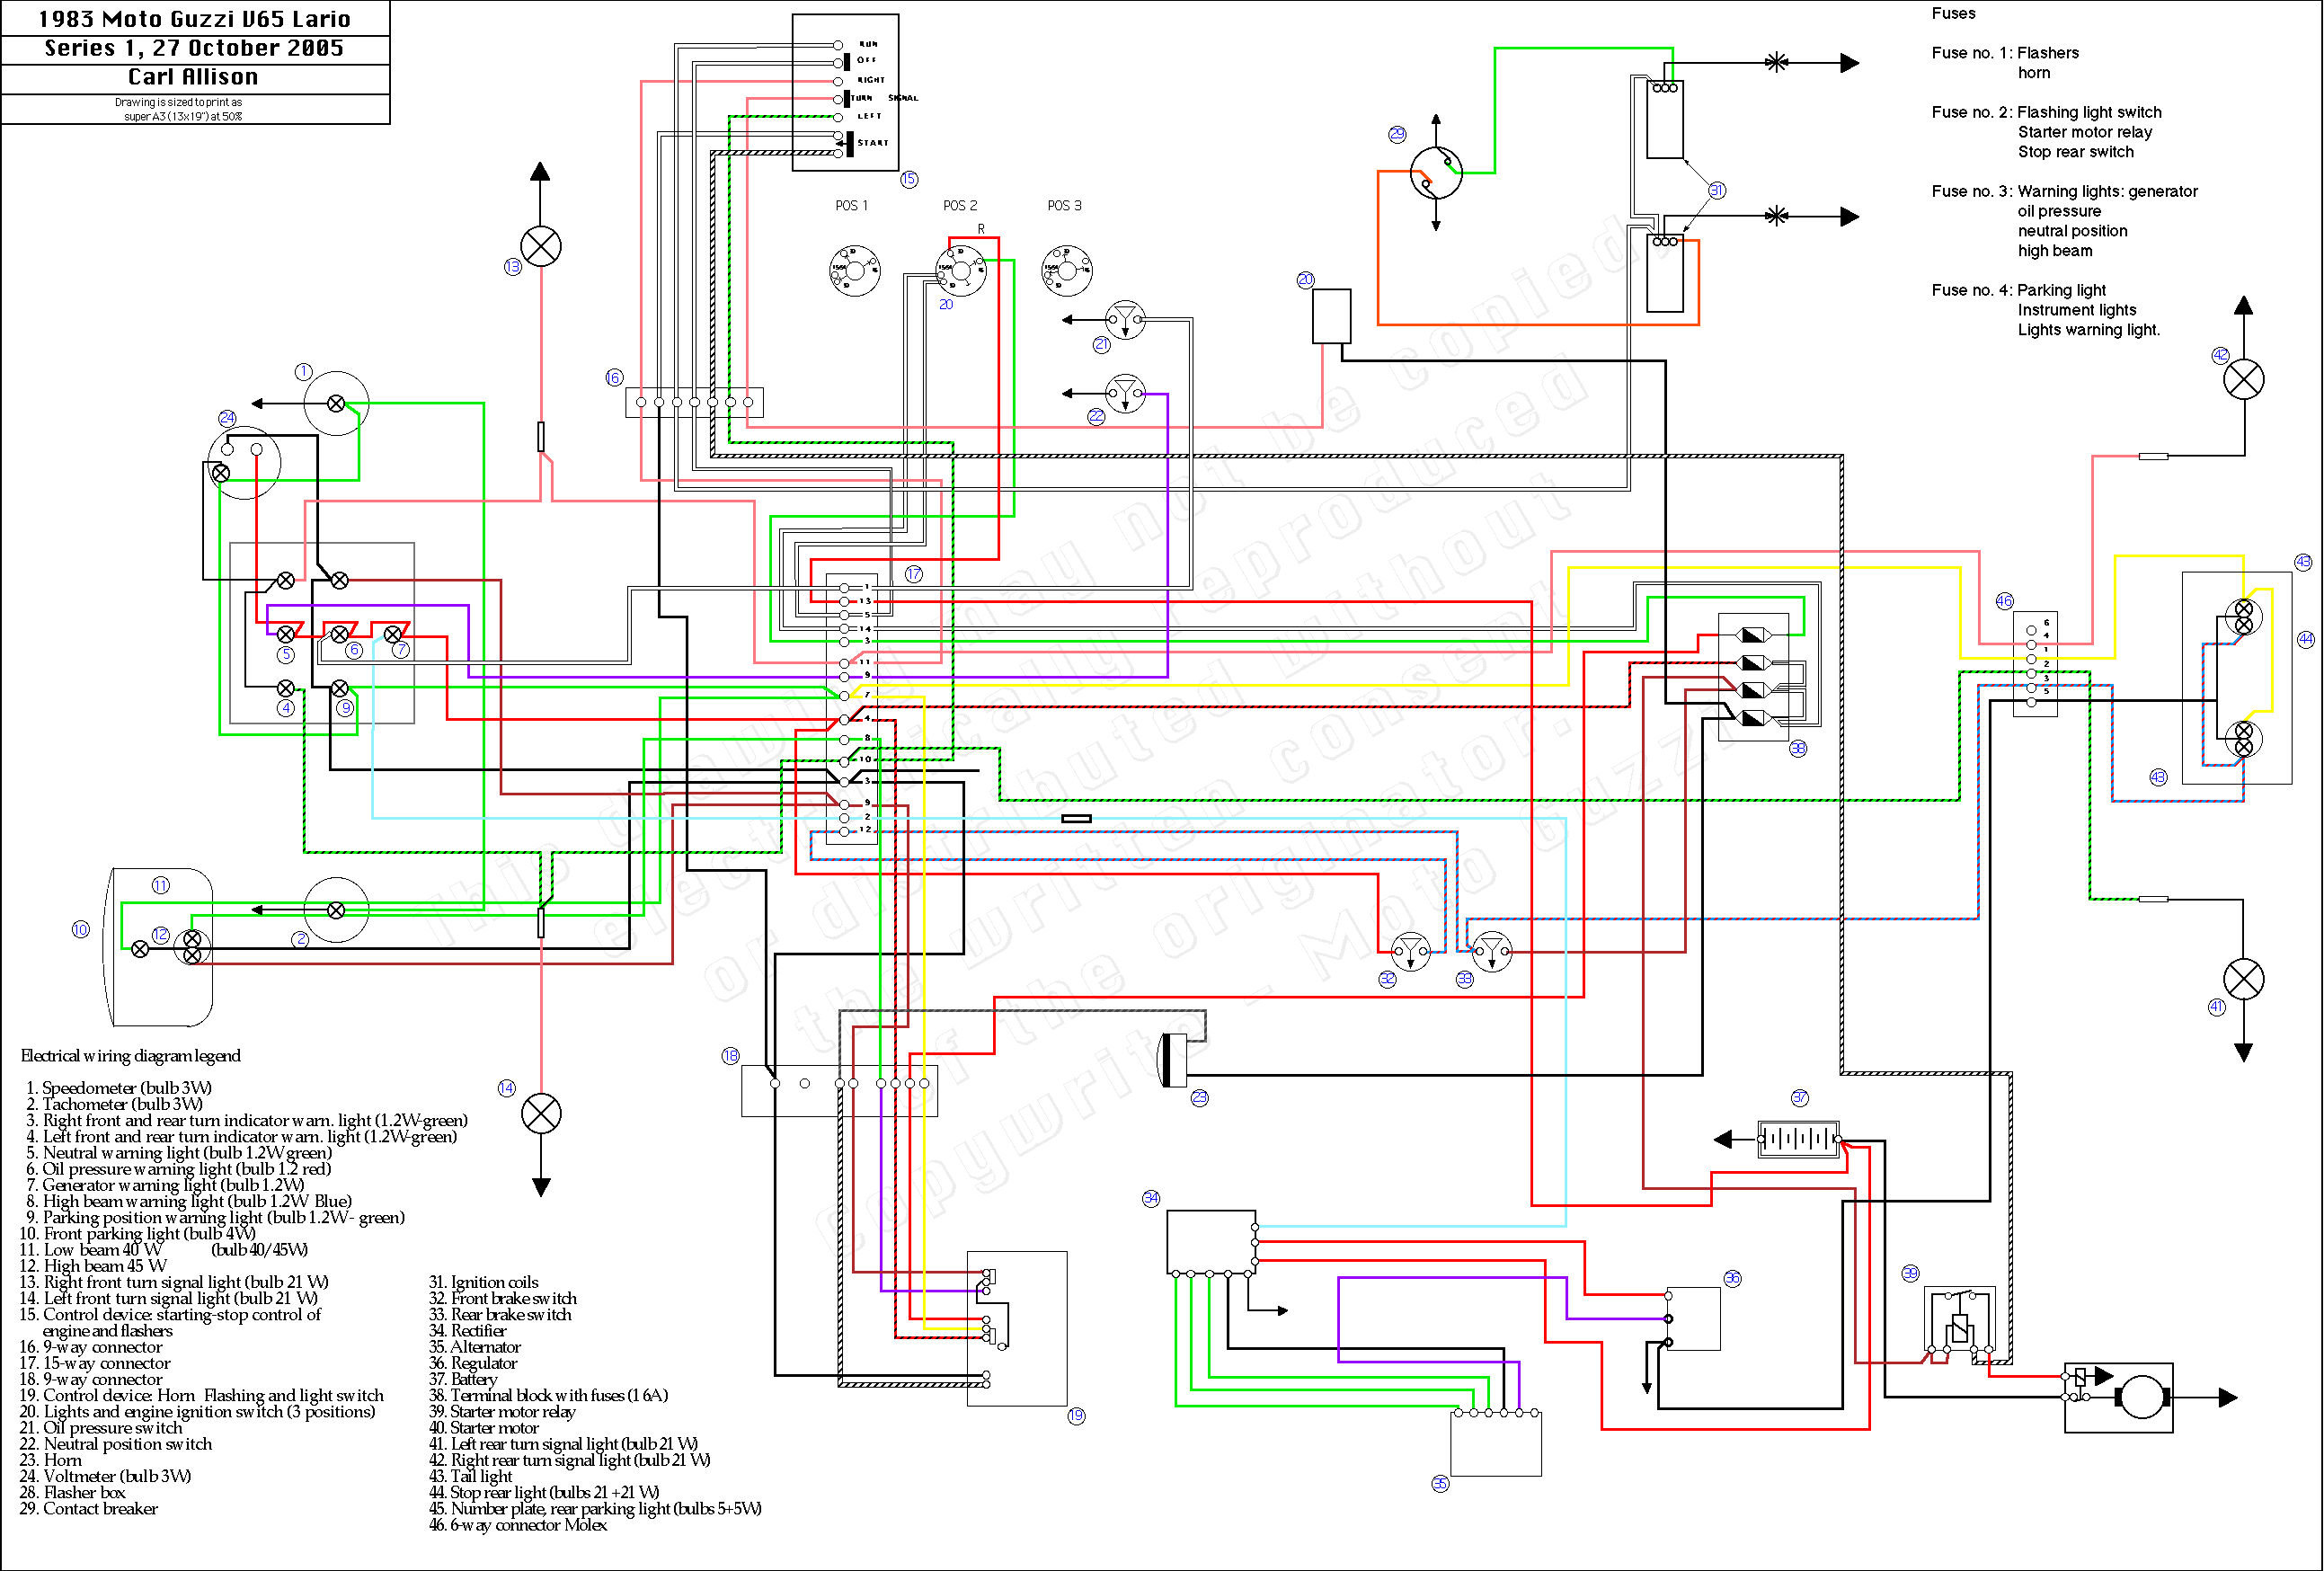 1985 moto guzzi california 2 wiring diagram